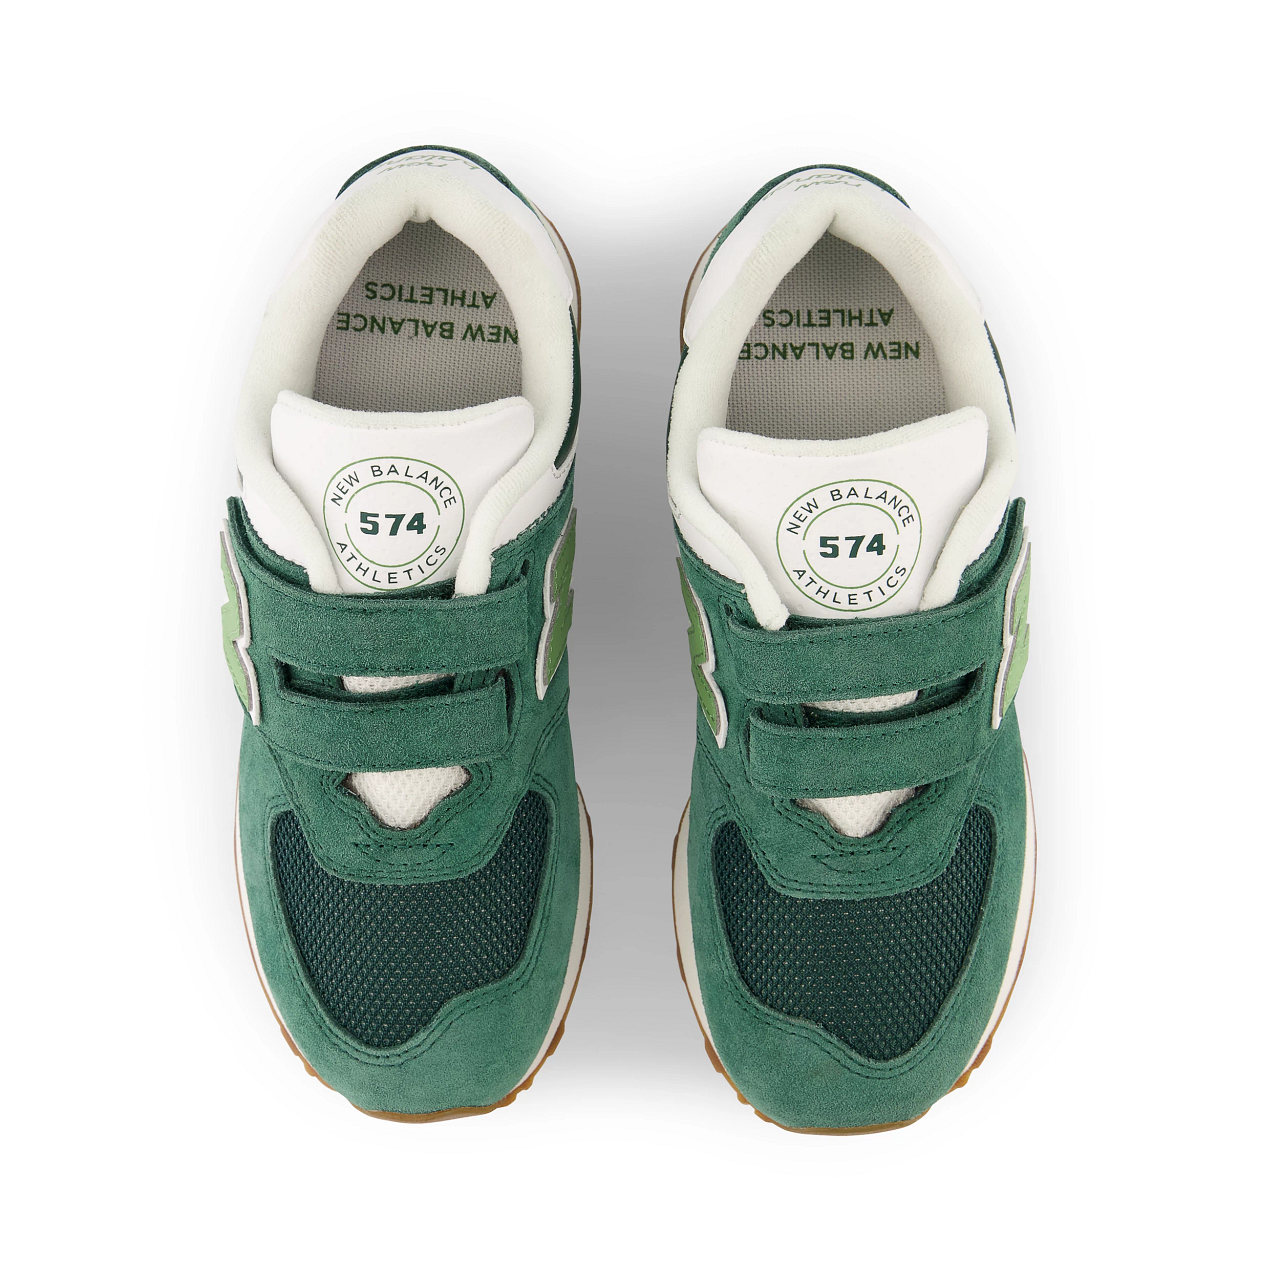 New Balance 574 Sneaker Nightwatch/Green Chive